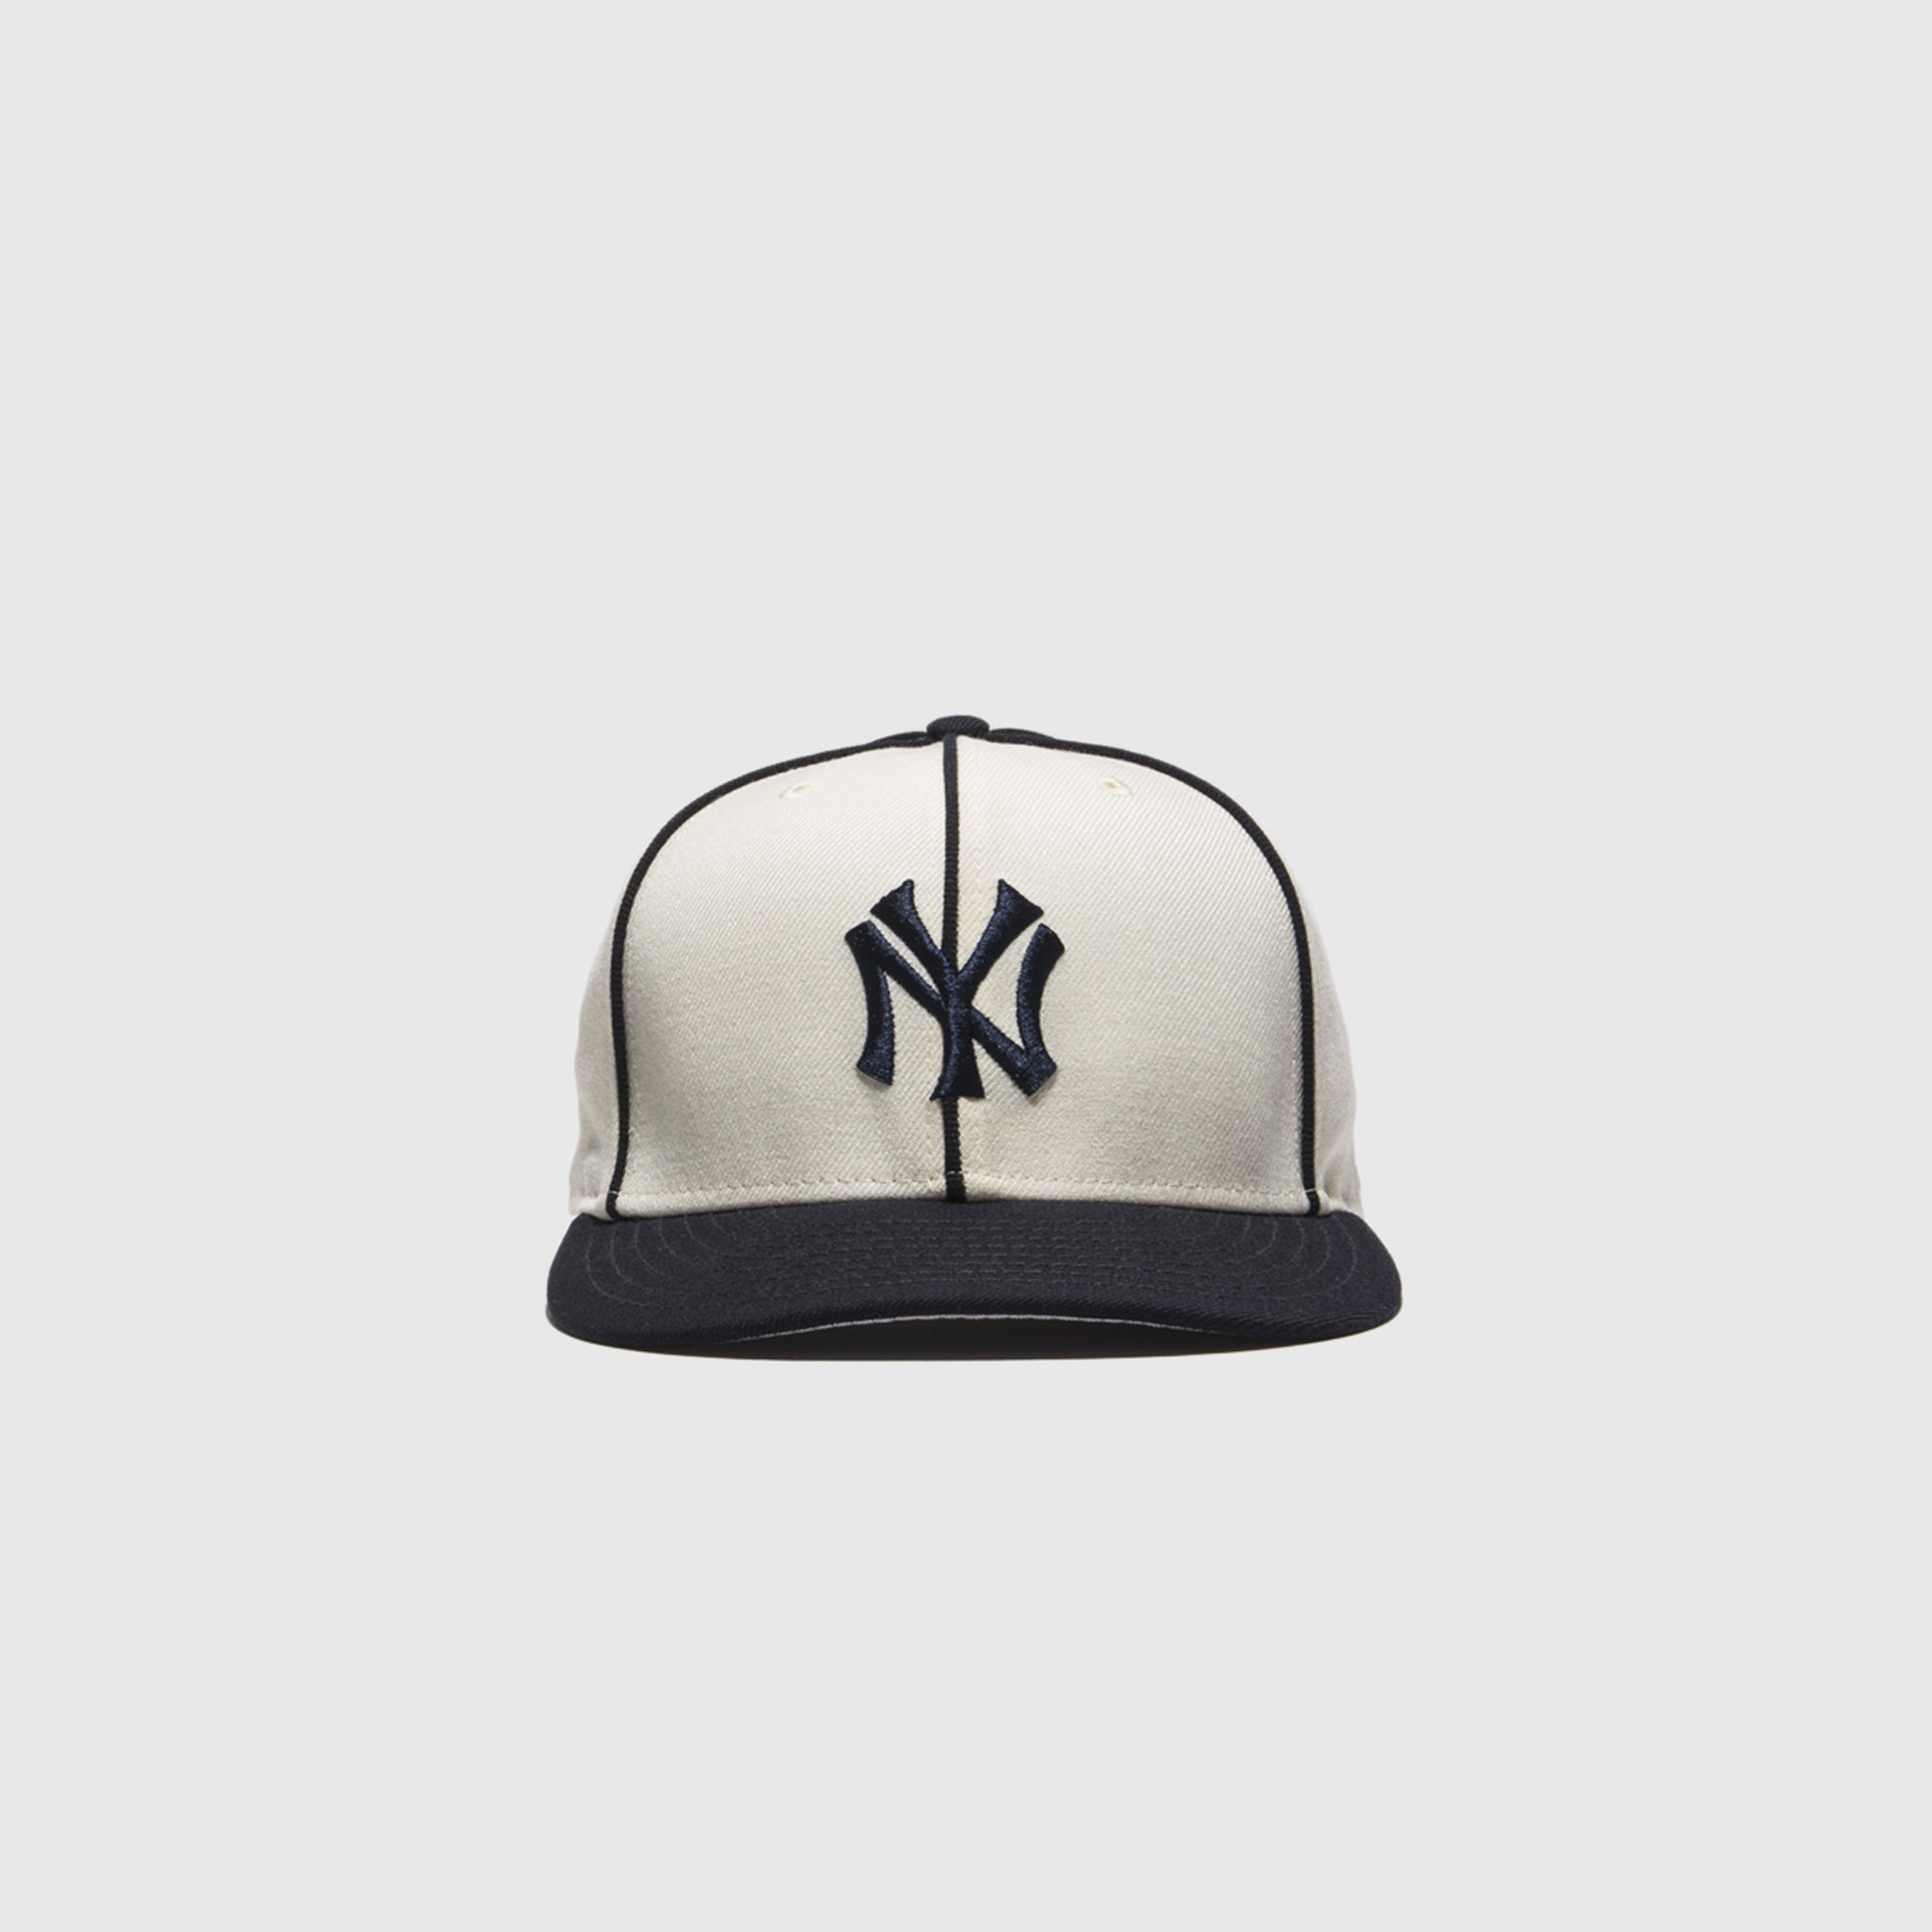 New Era 59Fifty Hat Men Women New York Yankees Navy Blue Pinstripe Fitted  Cap